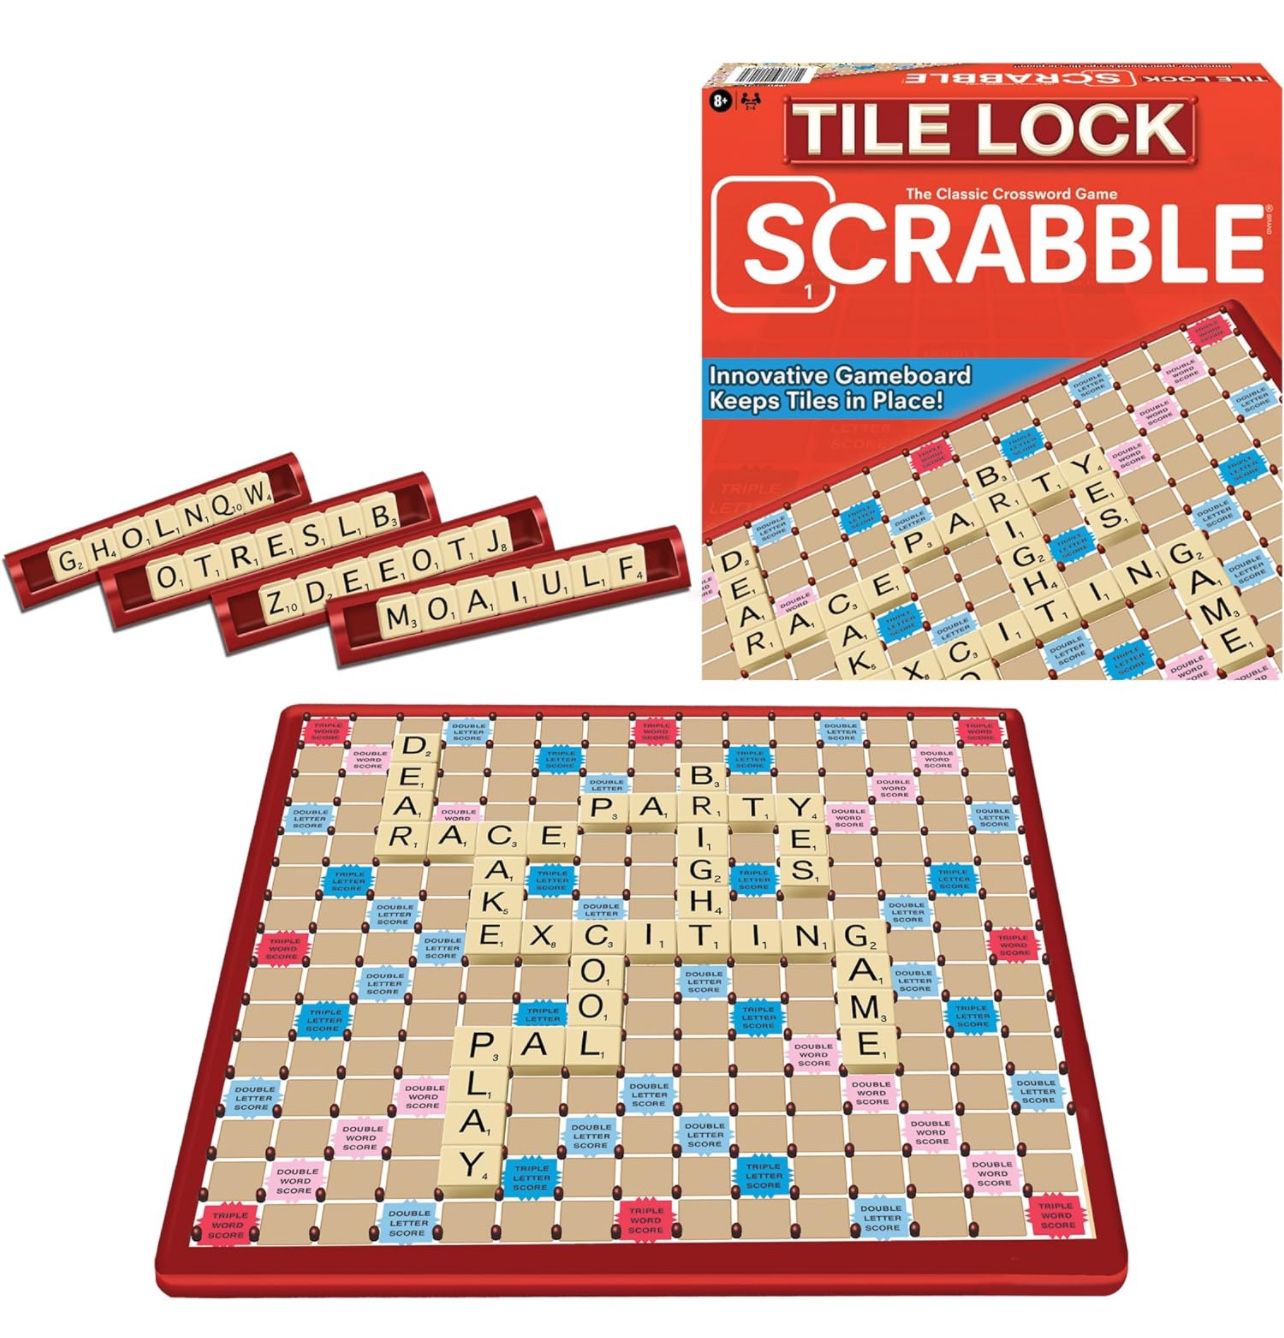 New Tile Lock Scrabble - $5